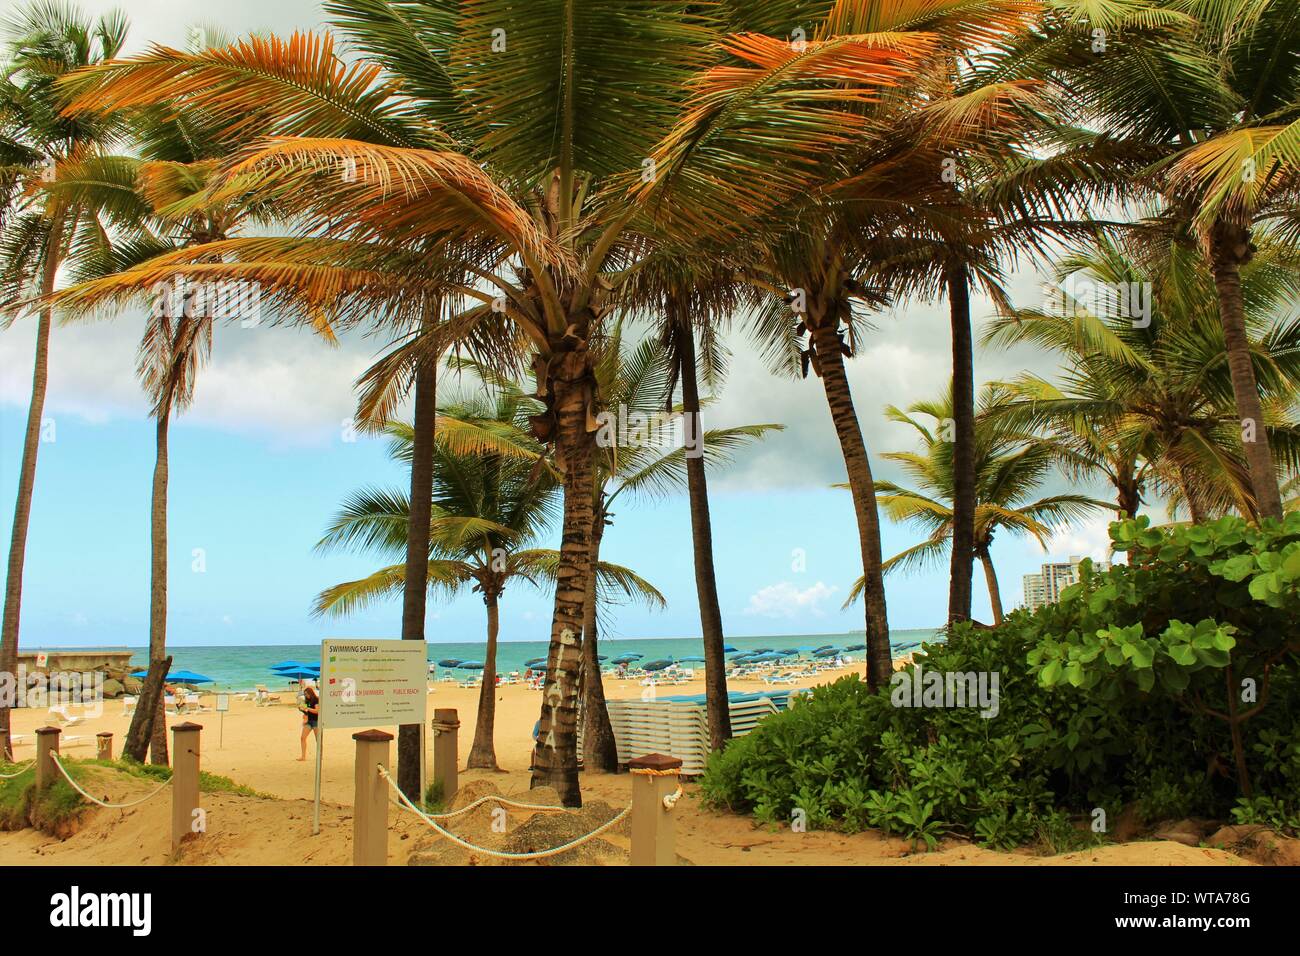 Entrance to the Condado Playa Concha public beach, close to Ashford Avenue, on the northern coast of Puerto Rico. Stock Photo